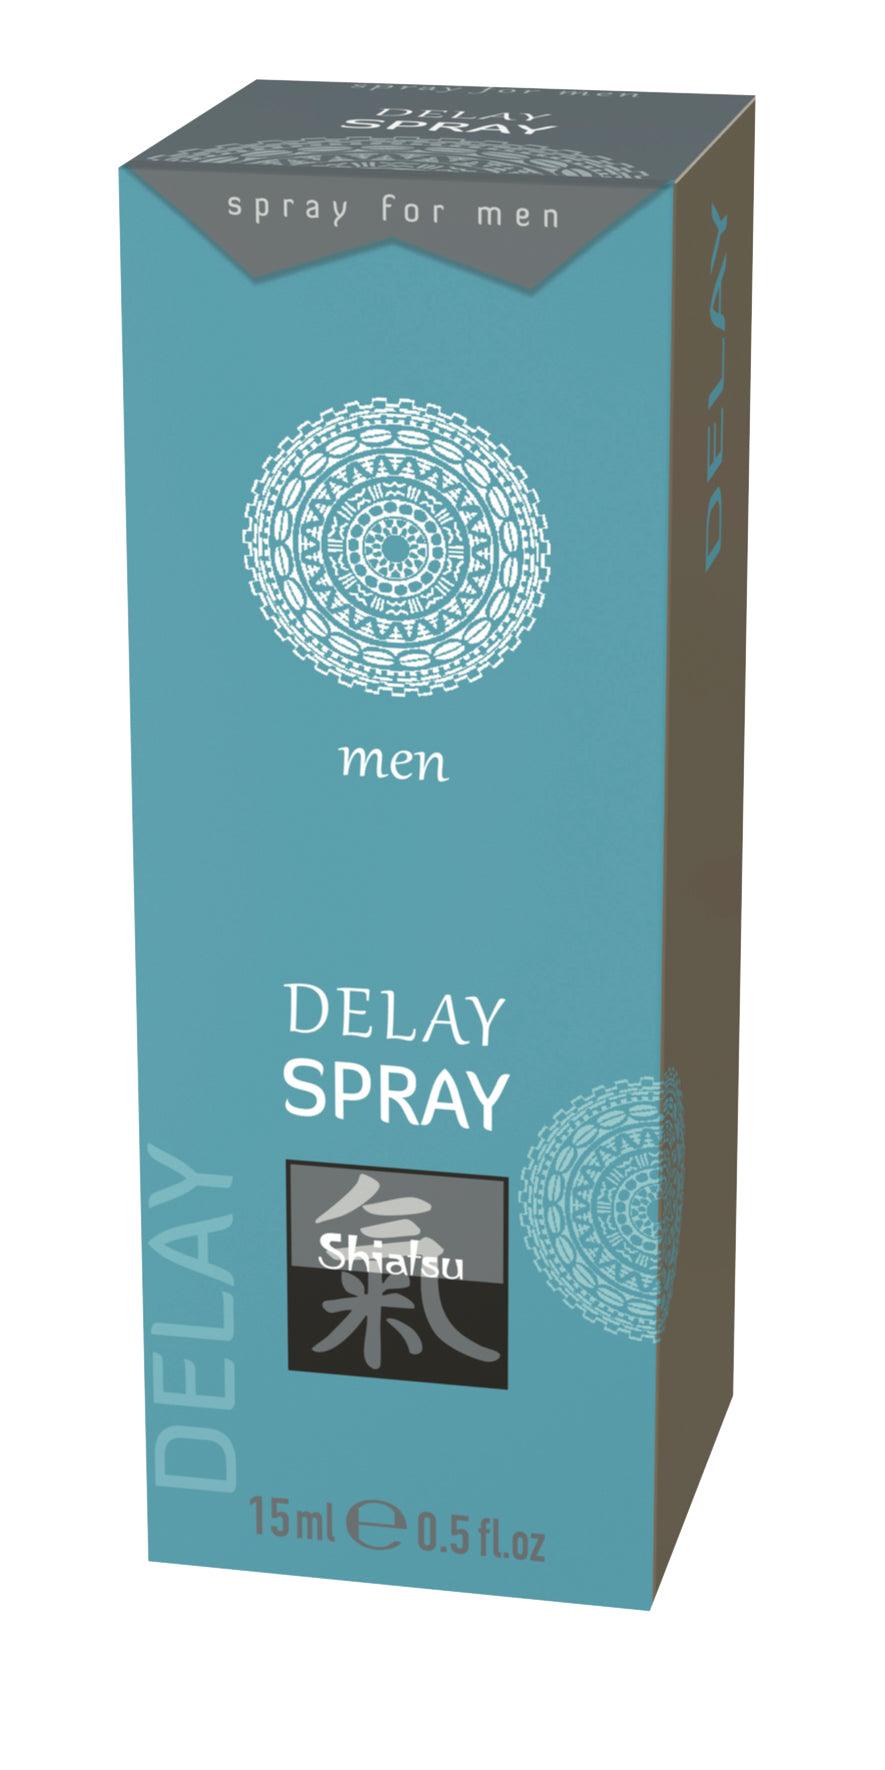 Shiatsu Delay Spray 15ml - Take A Peek